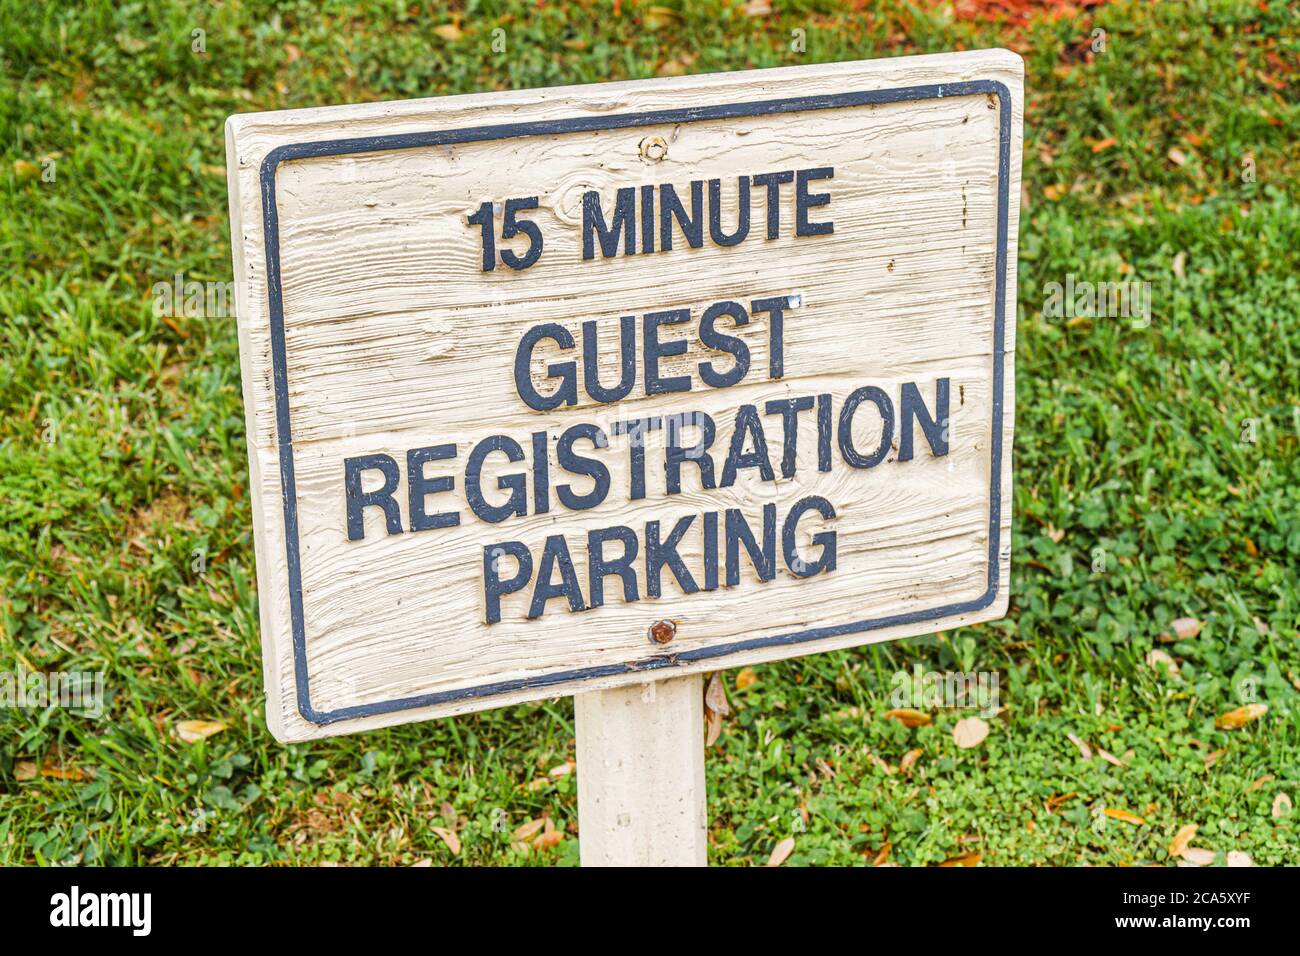 Deerfield Beach Florida,Hilton Deerfield Beach Boca Raton,hotel hotels lodging inn motel motels,parking lot,sign,logo,guest registration parking,15 mi Stock Photo